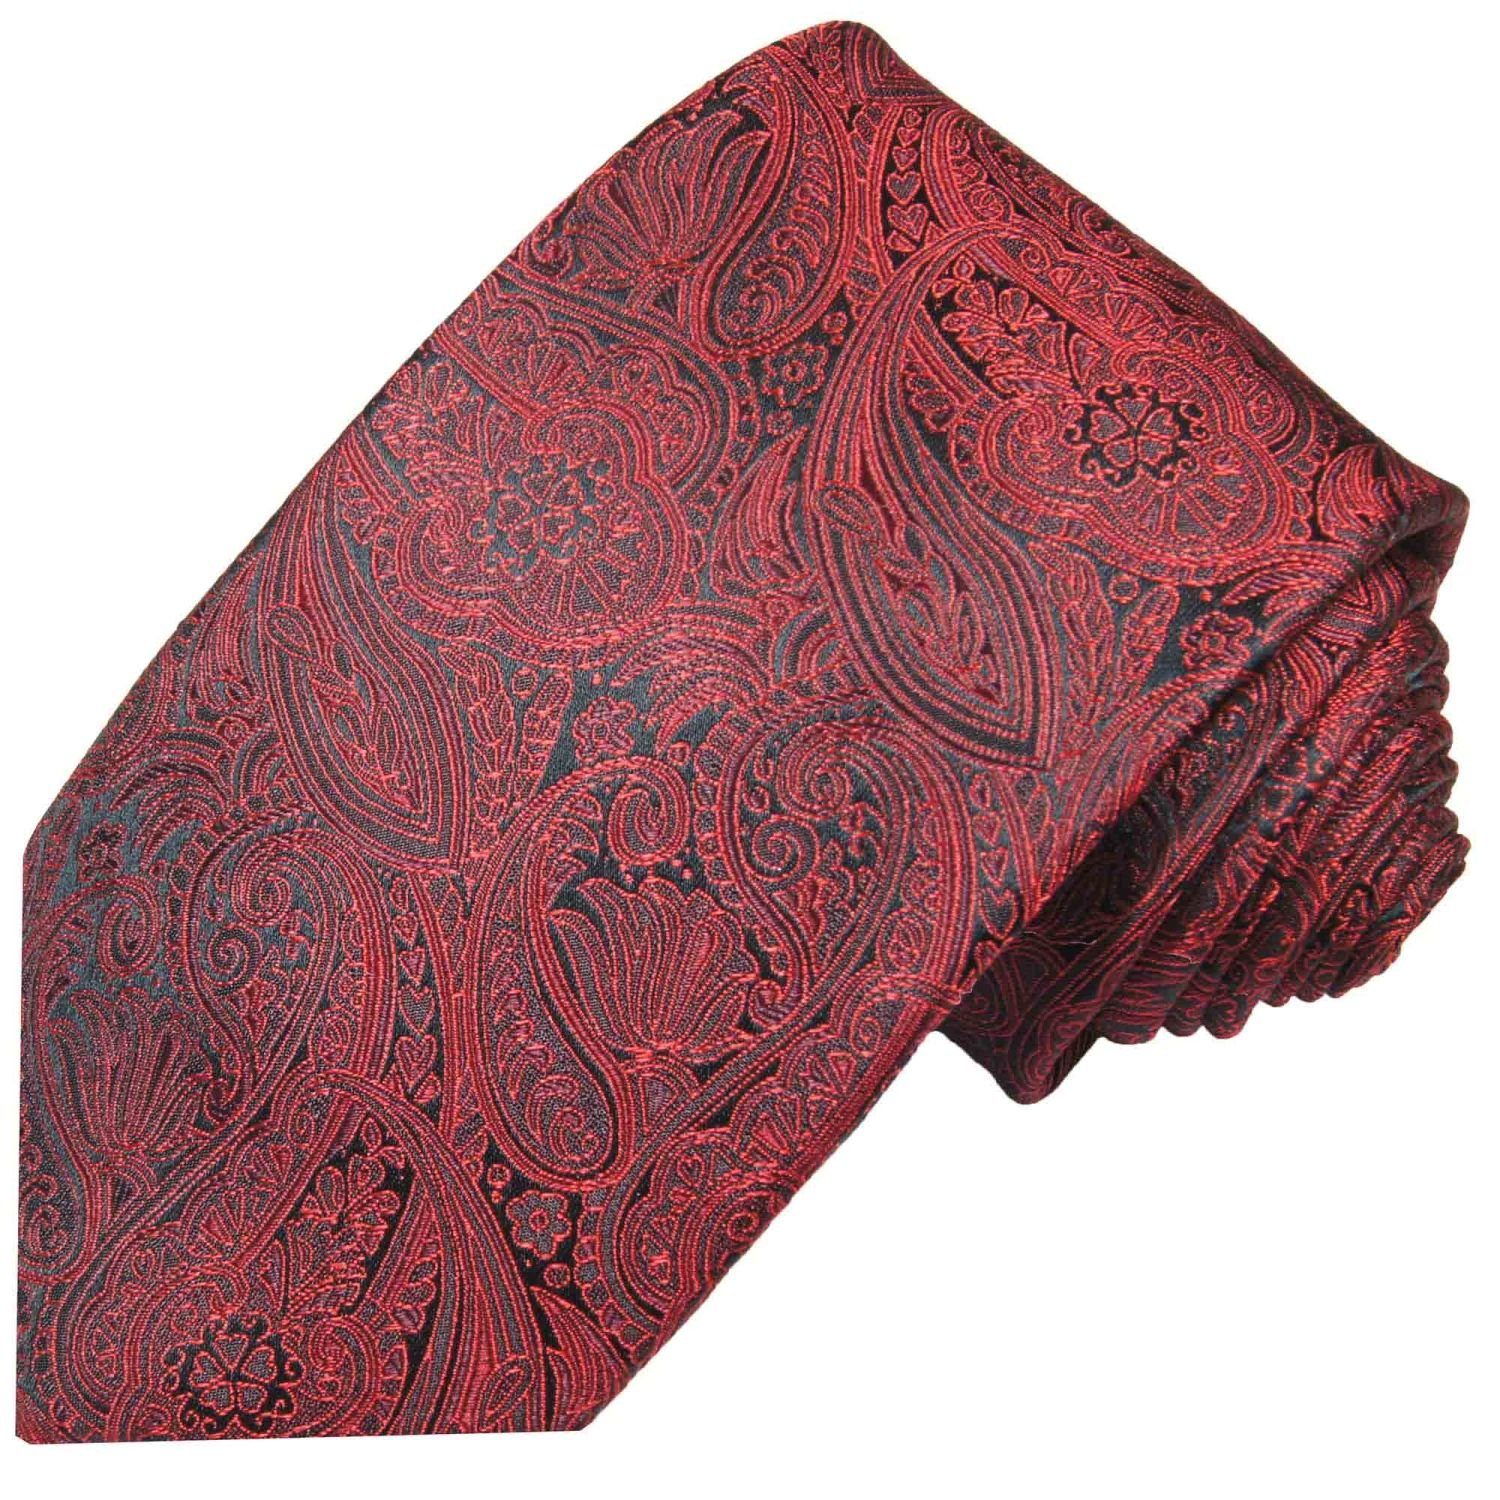 Breit brokat Seidenkrawatte Paul rot Herren Schlips (8cm), 100% 586 Krawatte Malone paisley Elegante Seide